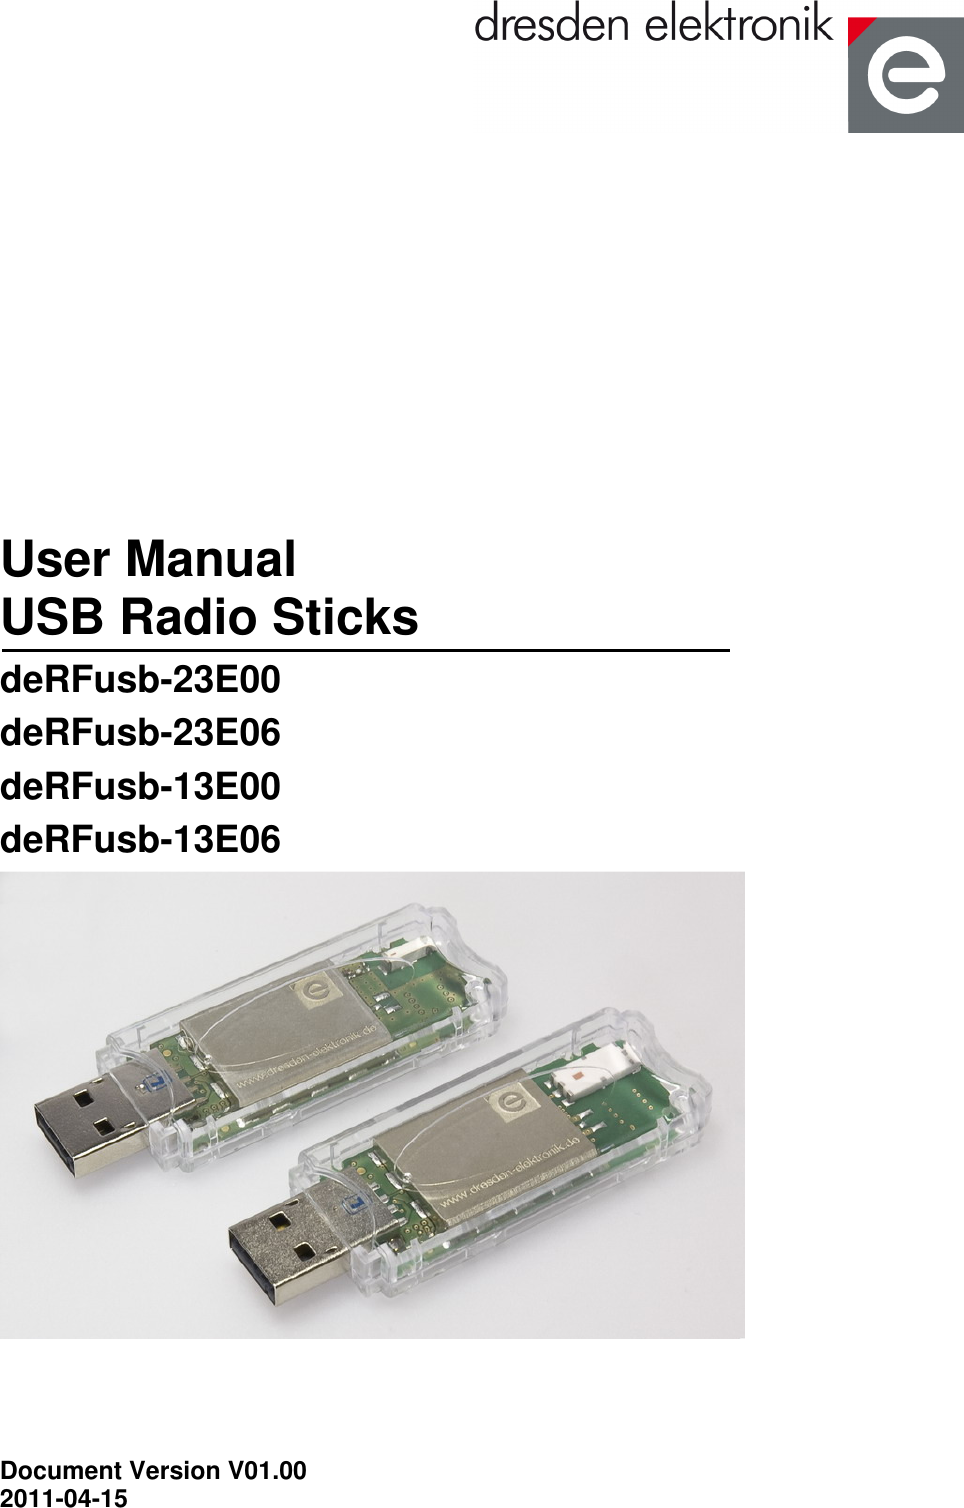  User Manual  USB Radio Sticks deRFusb-23E00 deRFusb-23E06 deRFusb-13E00 deRFusb-13E06    Document Version V01.00 2011-04-15 